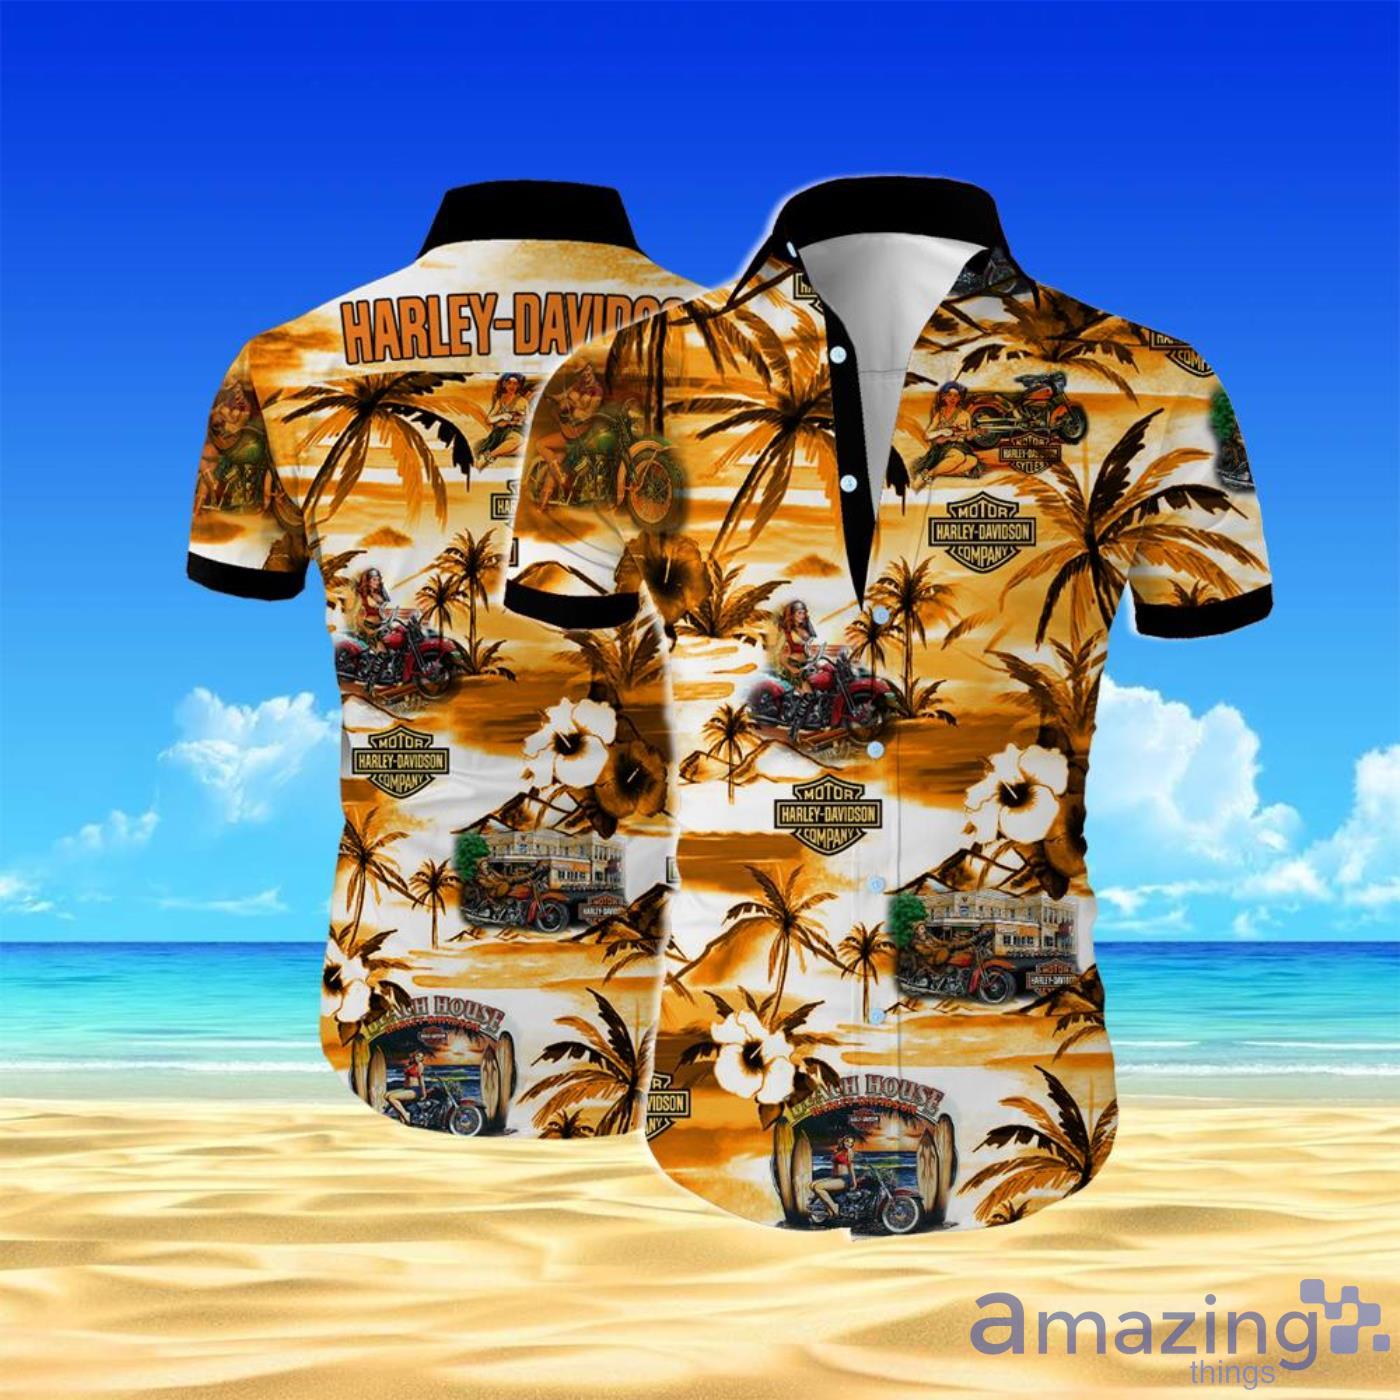 Harley Davidson Tropical Beach Short Sleeves Hawaiian Shirt Product Photo 1